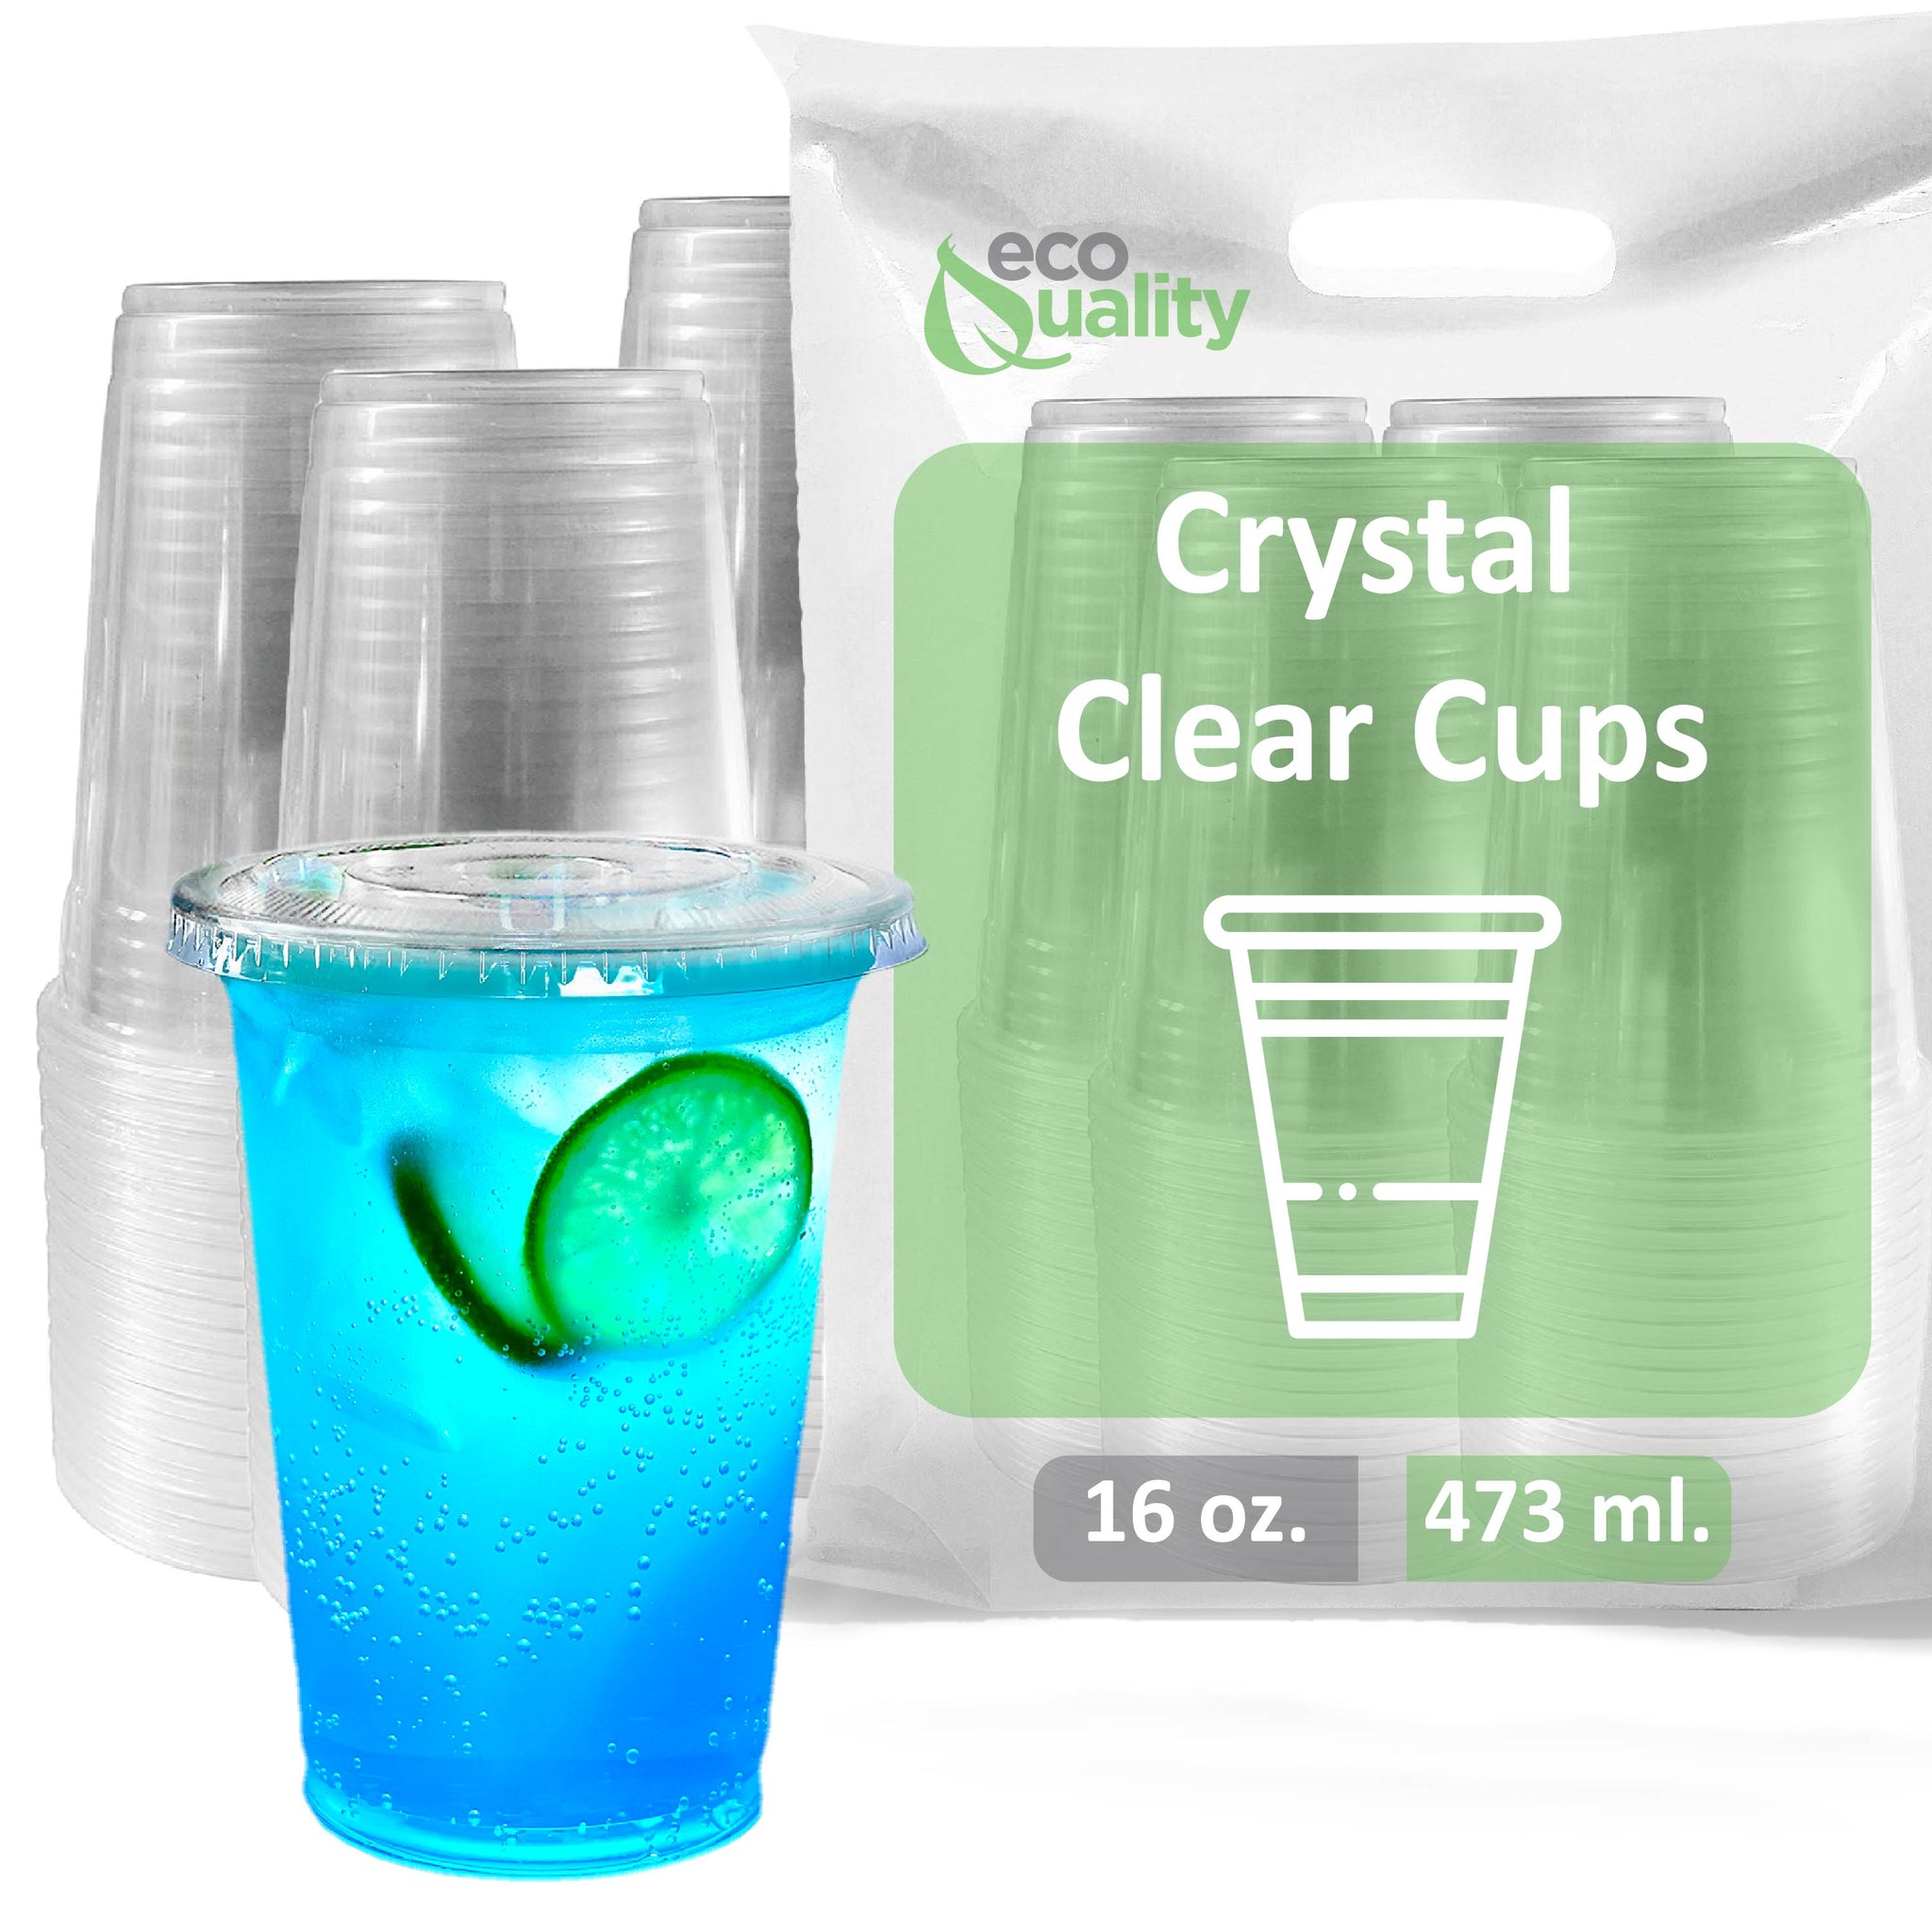 16oz Disposable Pet Clear Plastic Smoothie Cups Clear Flat Lids